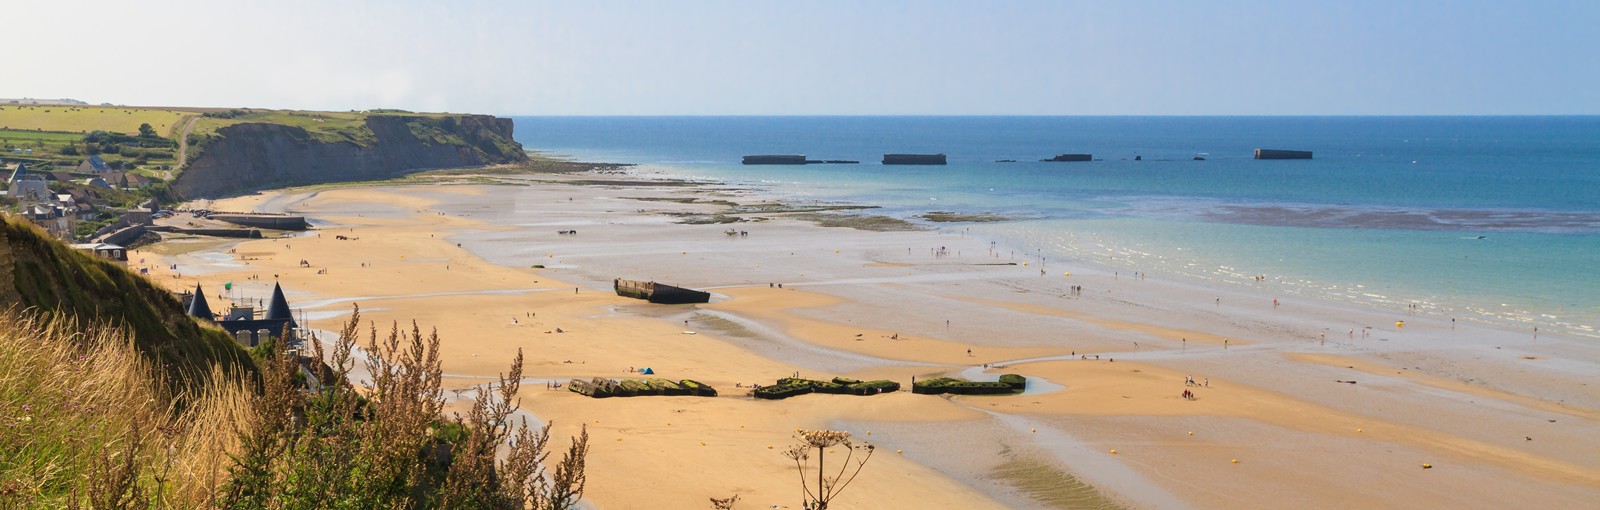 Normandy Landing beaches